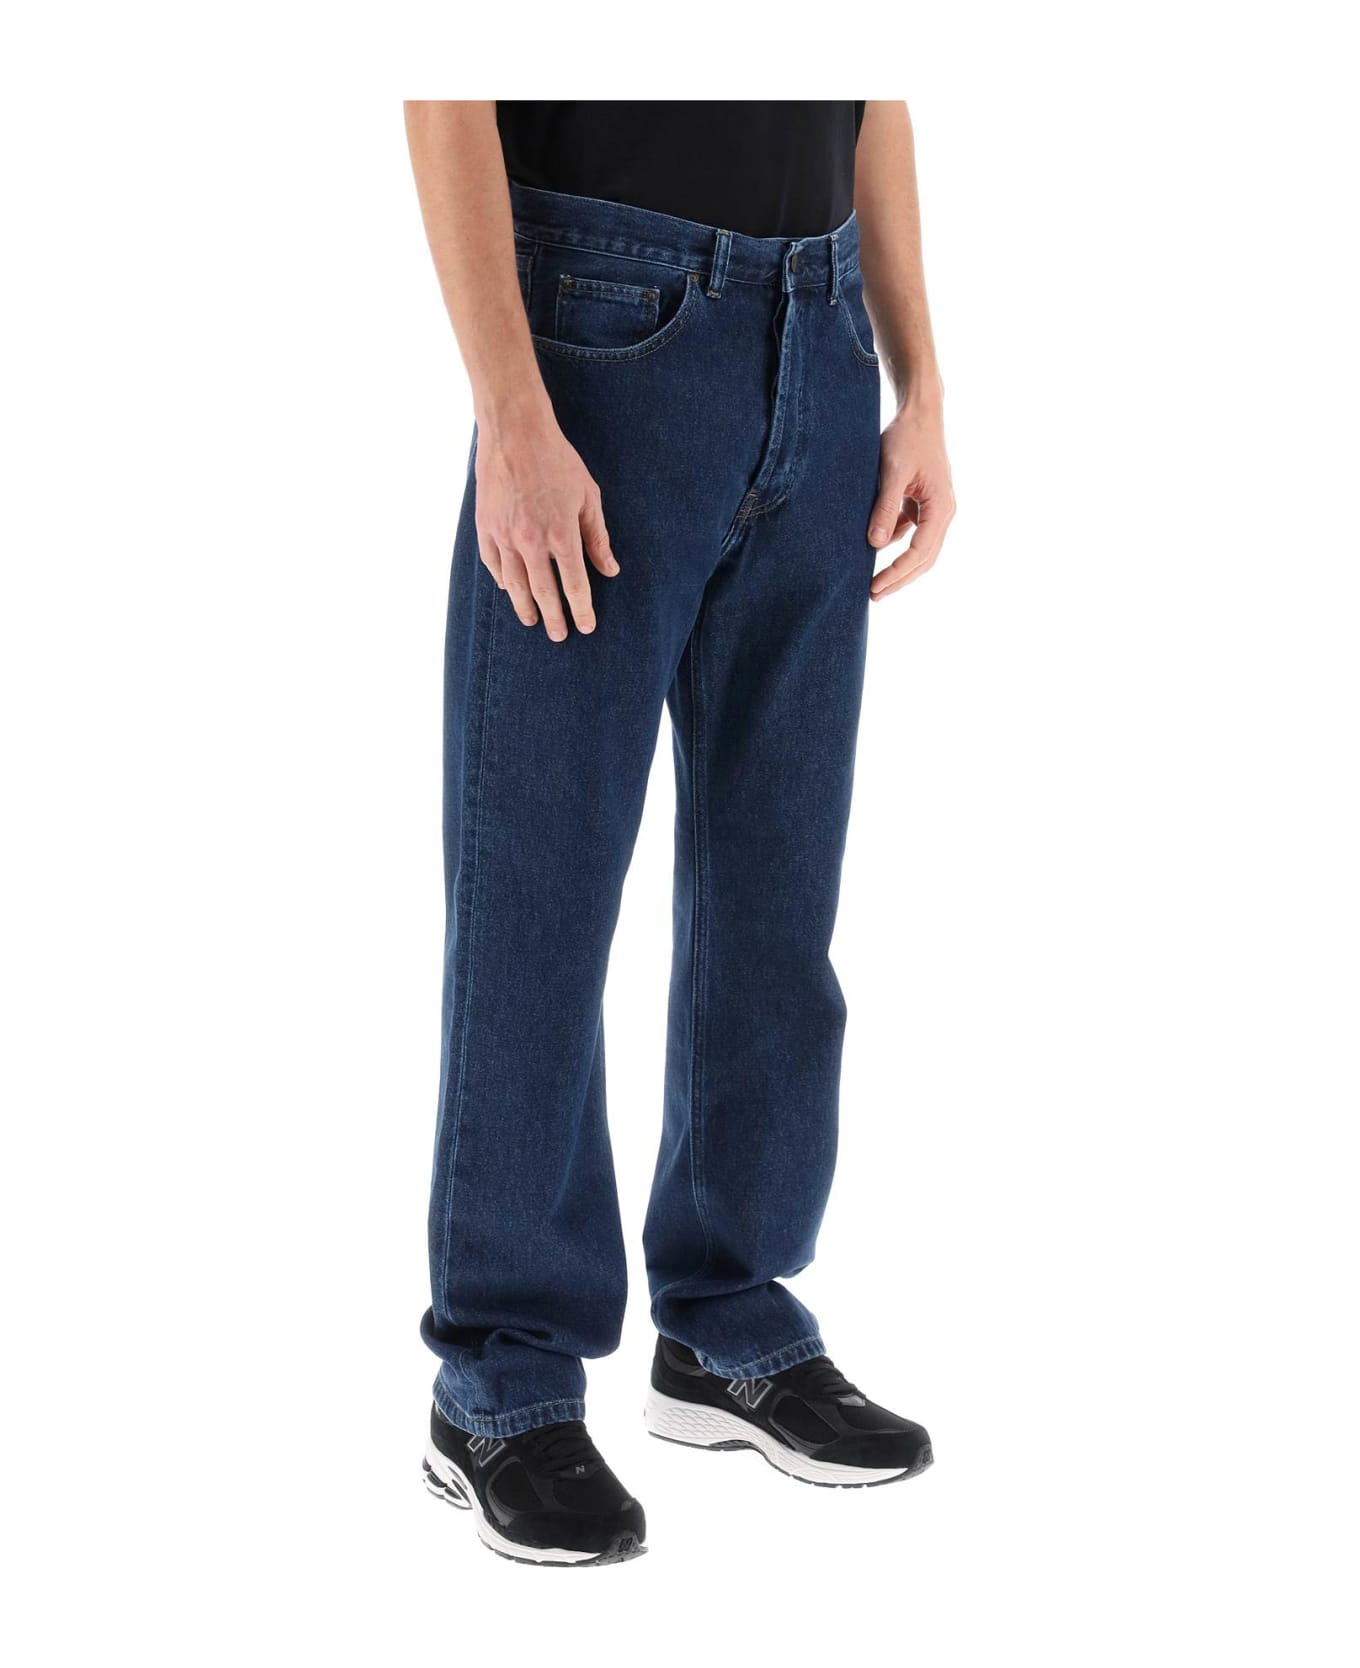 Carhartt Nolan Relaxed Fit Jeans - BLUE (Blue)